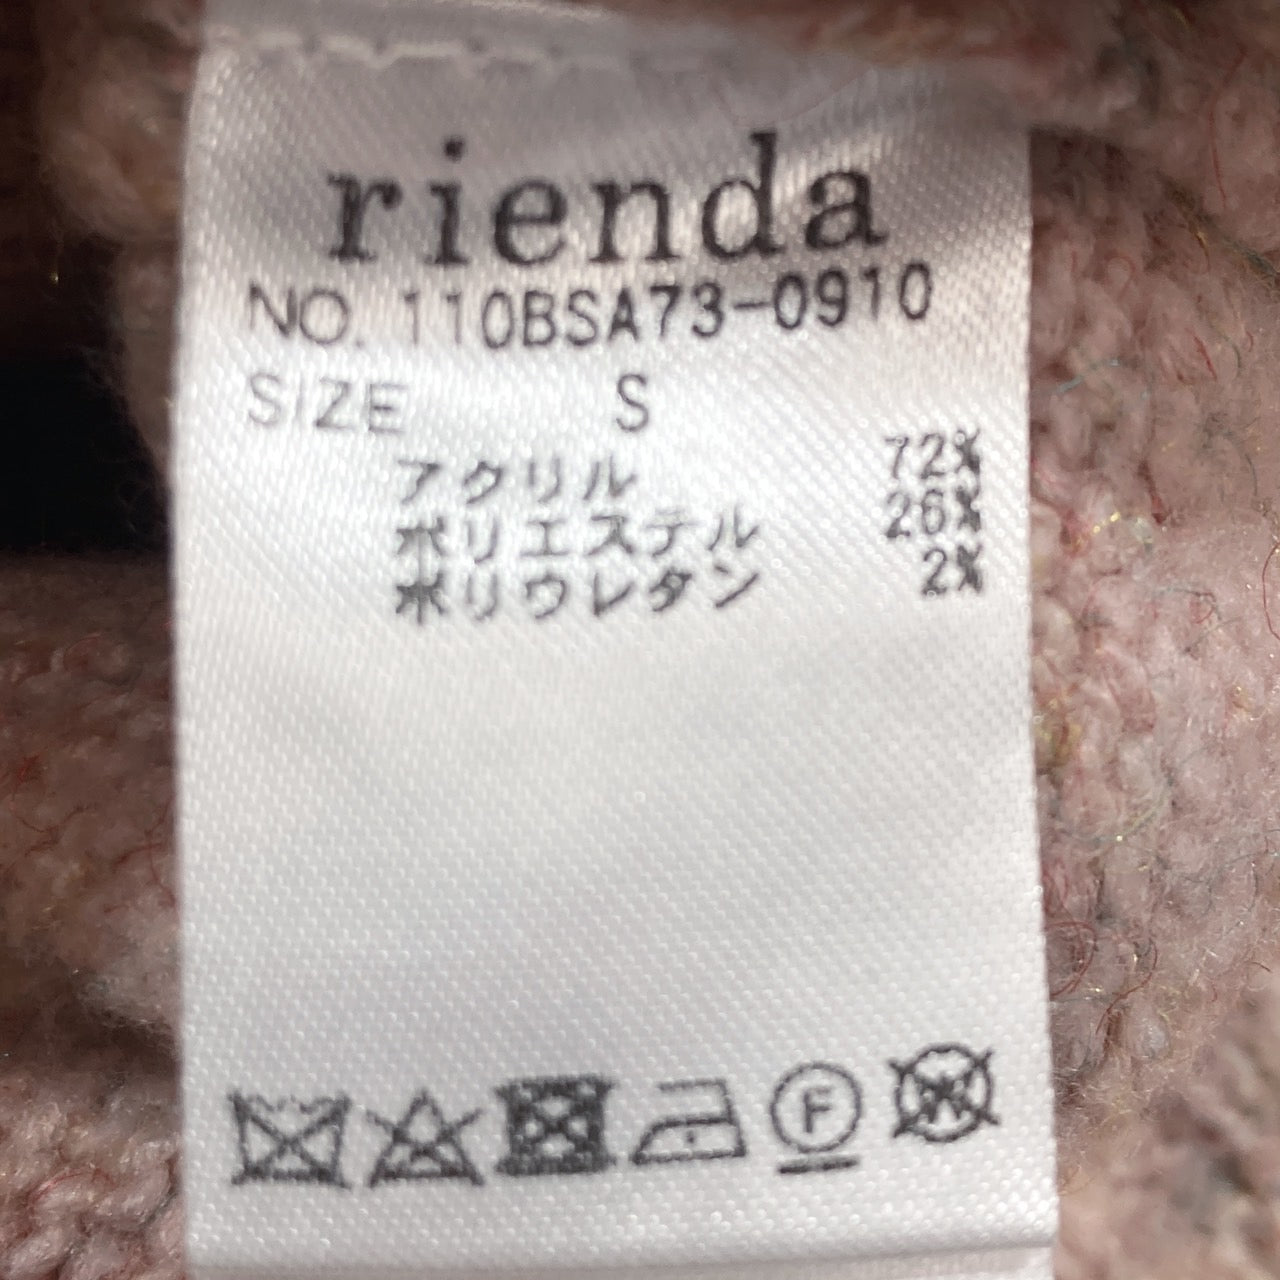 【27109】 rienda リエンダ セーター サイズS ピンク トップス 丸首 リブ 袖リブ 無地 プルオーバー シンプル 訳アリ レディース